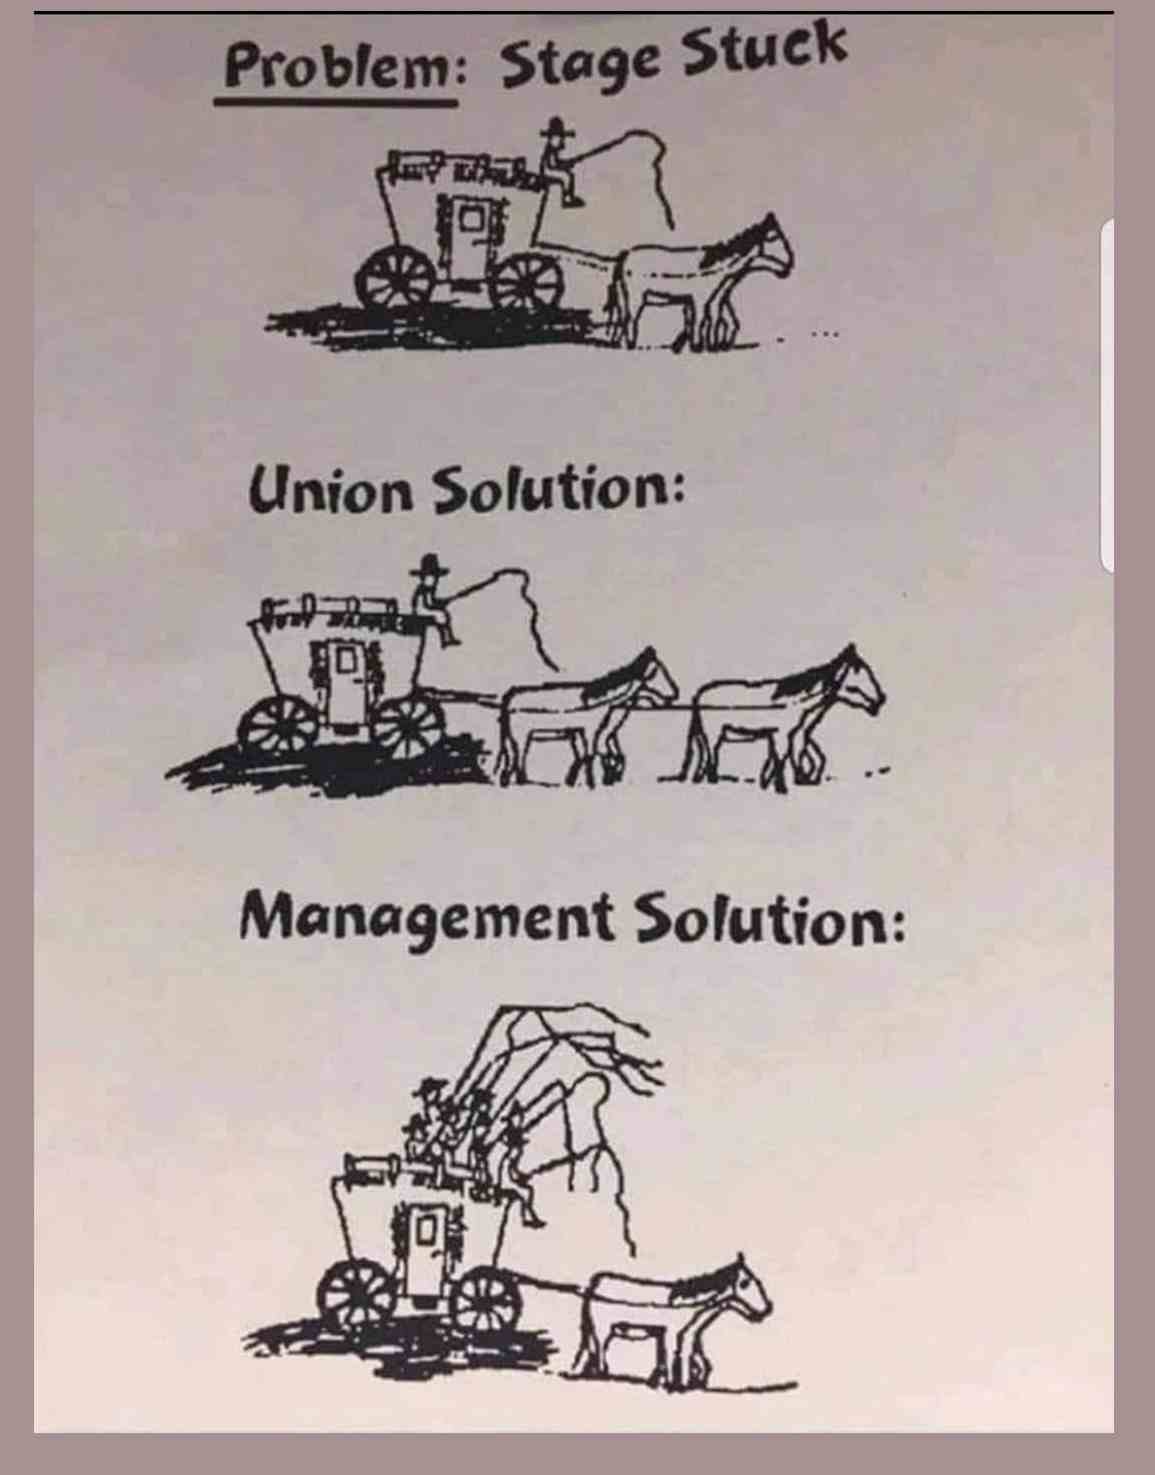 Stage stuck vs Management solution